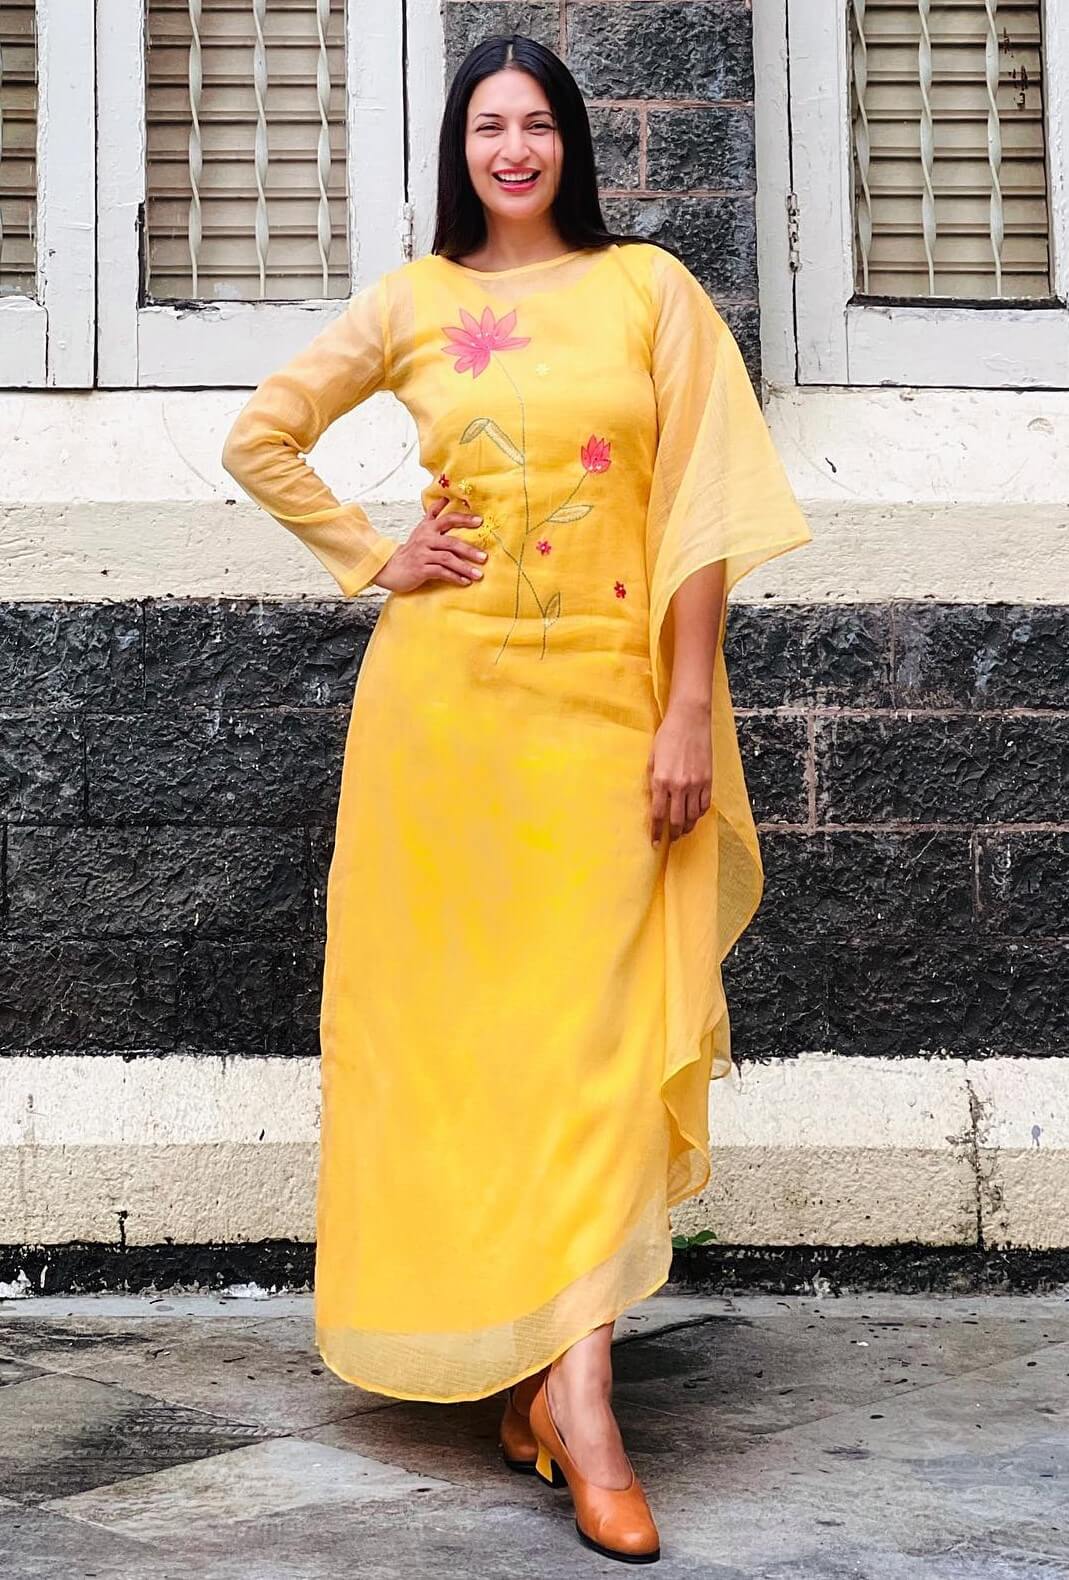 Yeh Hai Mohabbatein Actress Divyanka Tripathi In Warm Yellow Dress